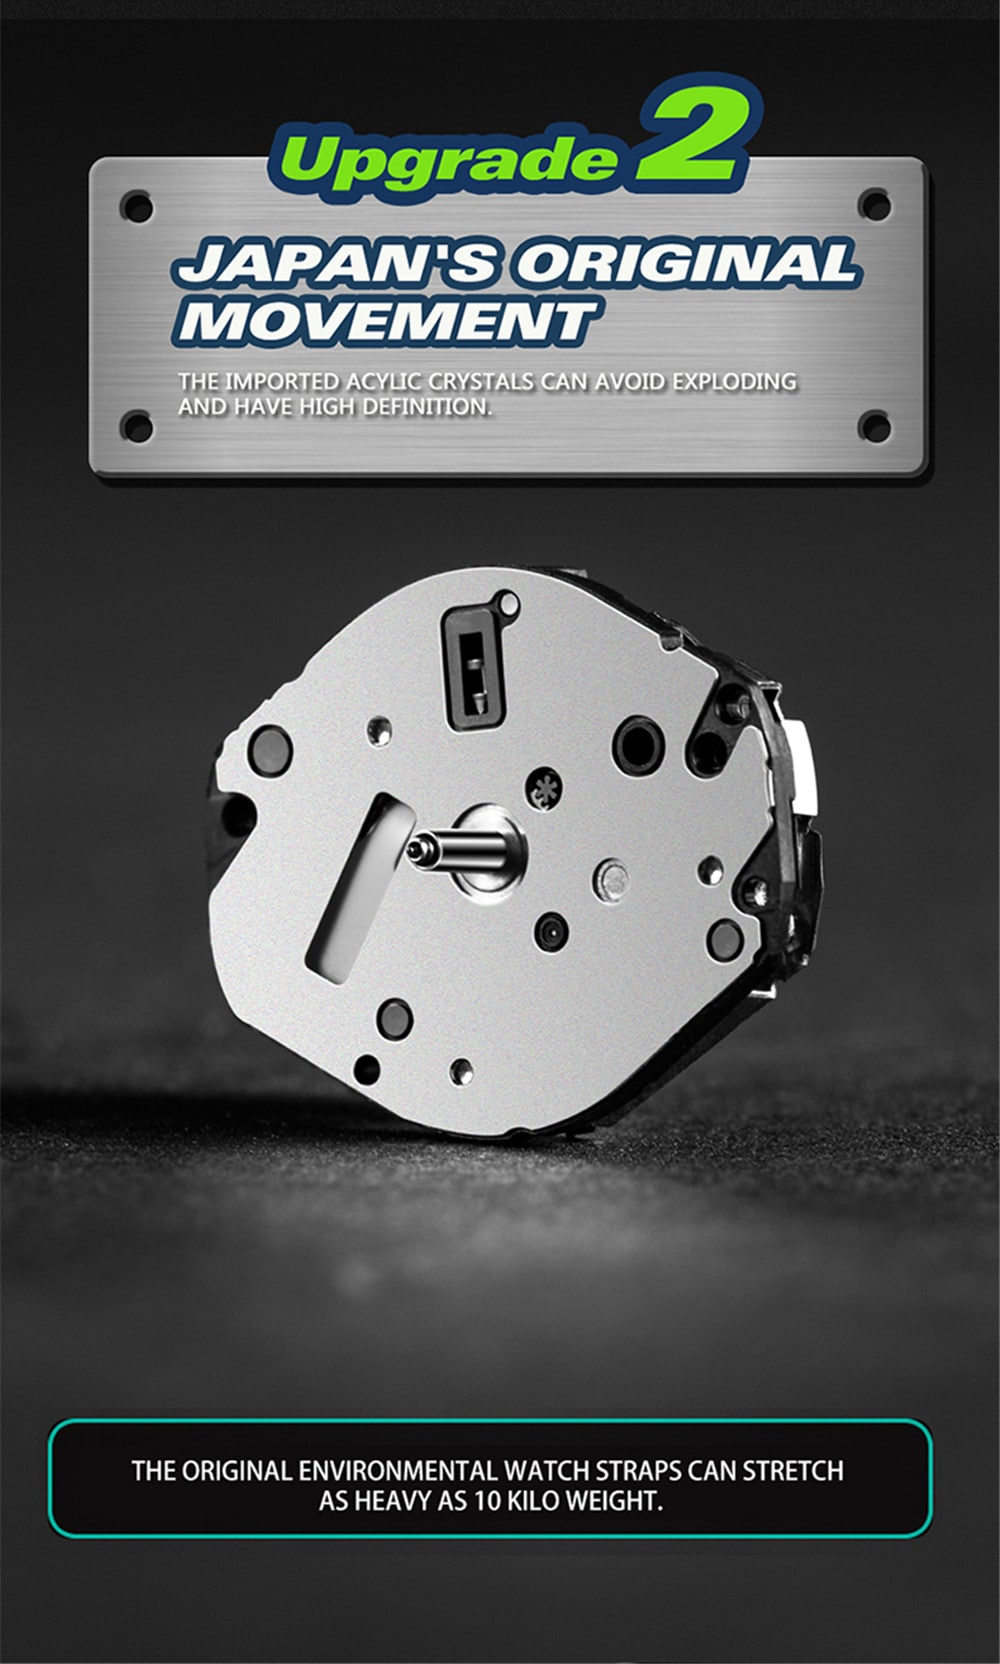 SANDA Sport Watch Men Military Waterproof Luxury Electronic Led Digital Watches- Multi-B